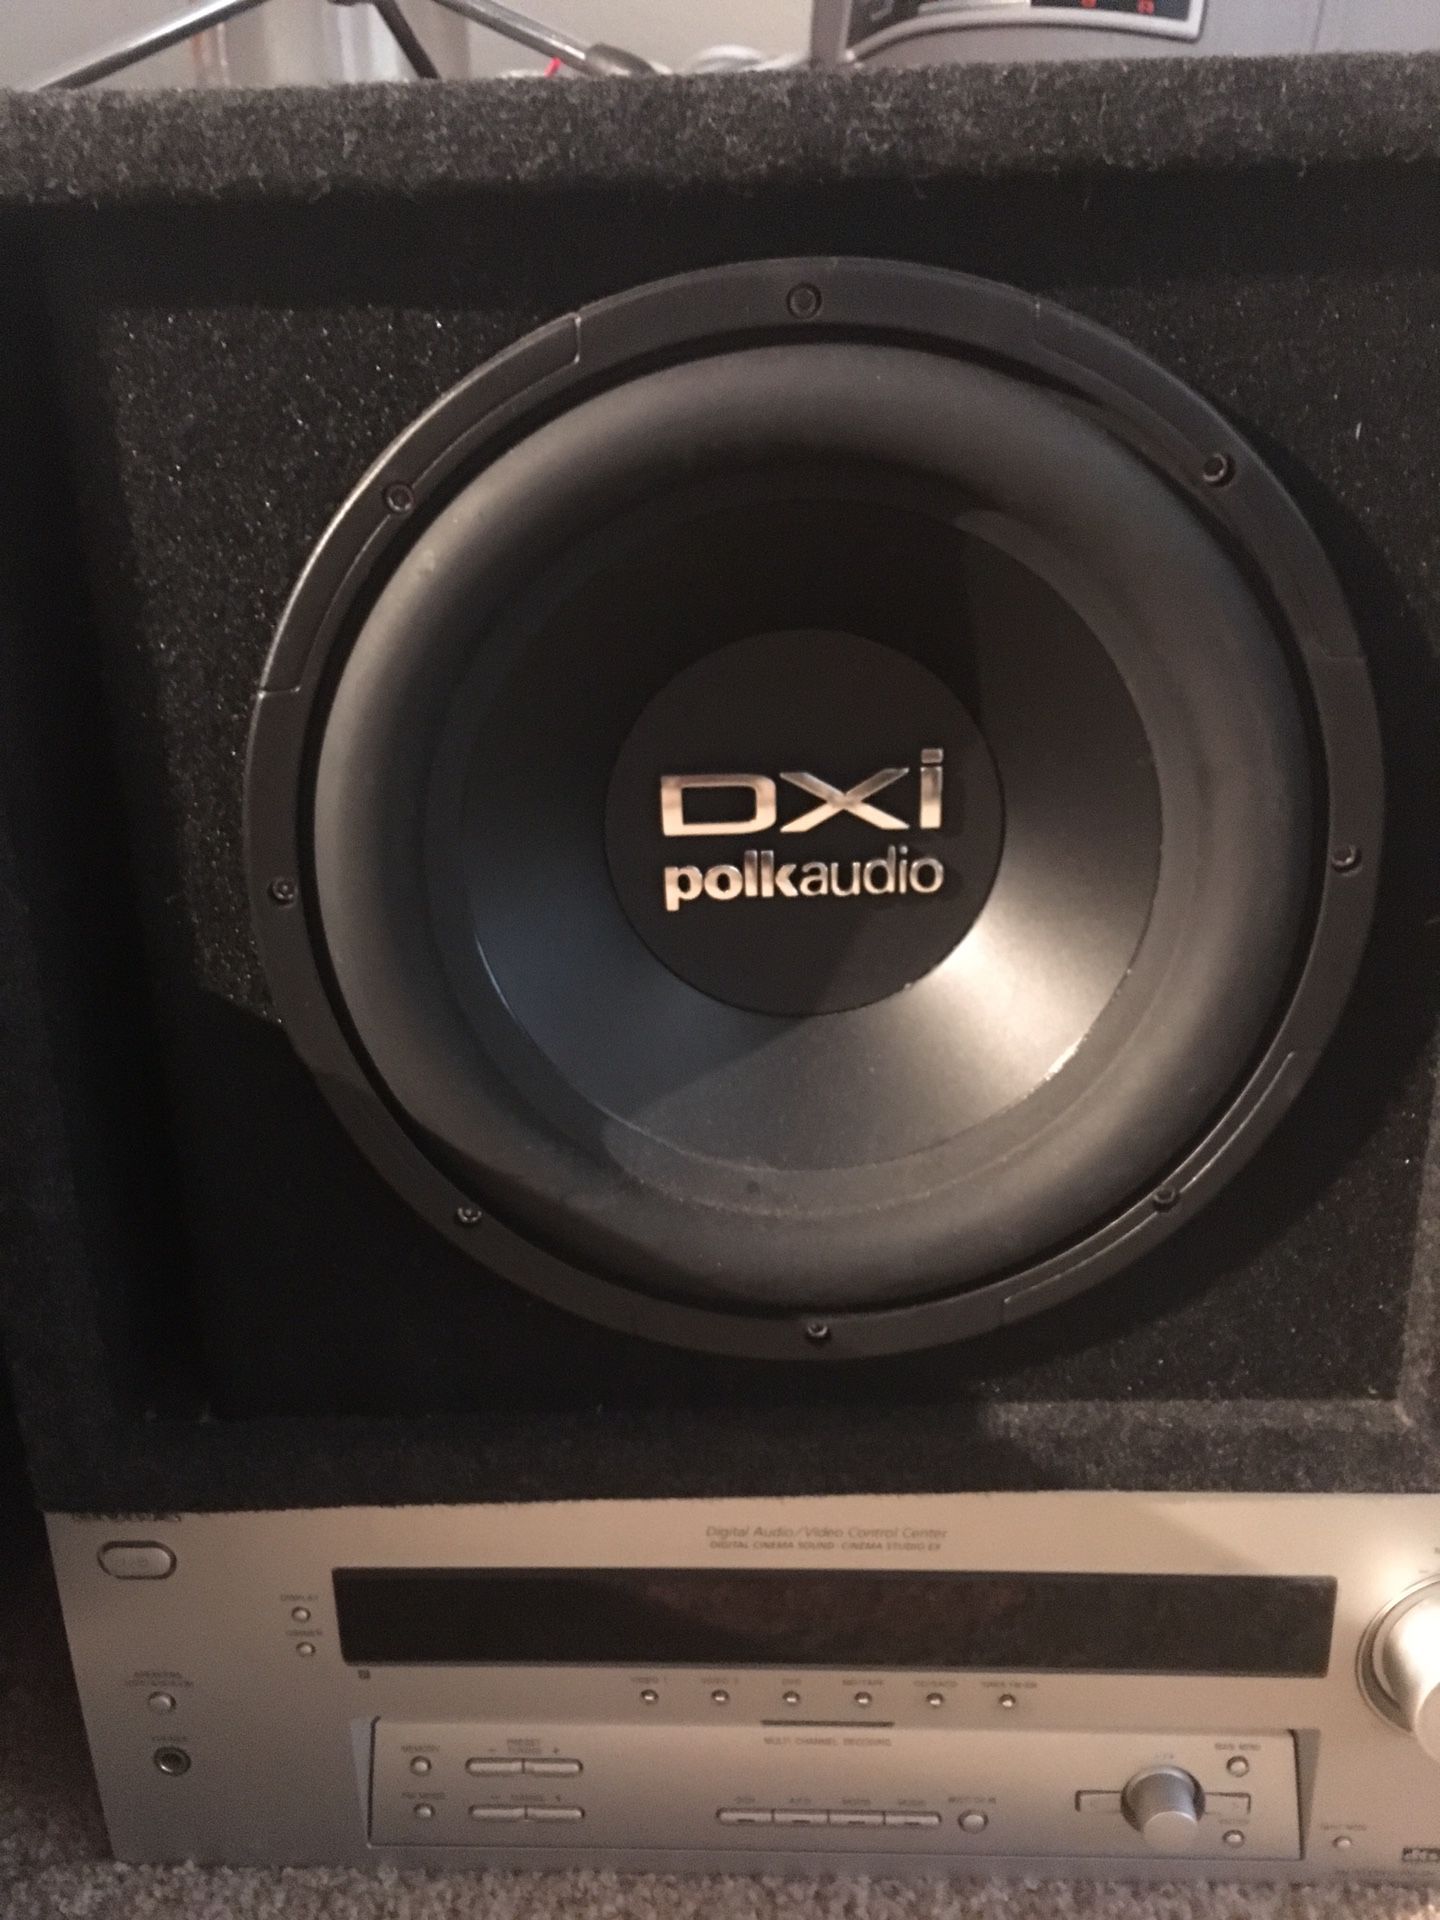 Dxi Polk audio subwoofer